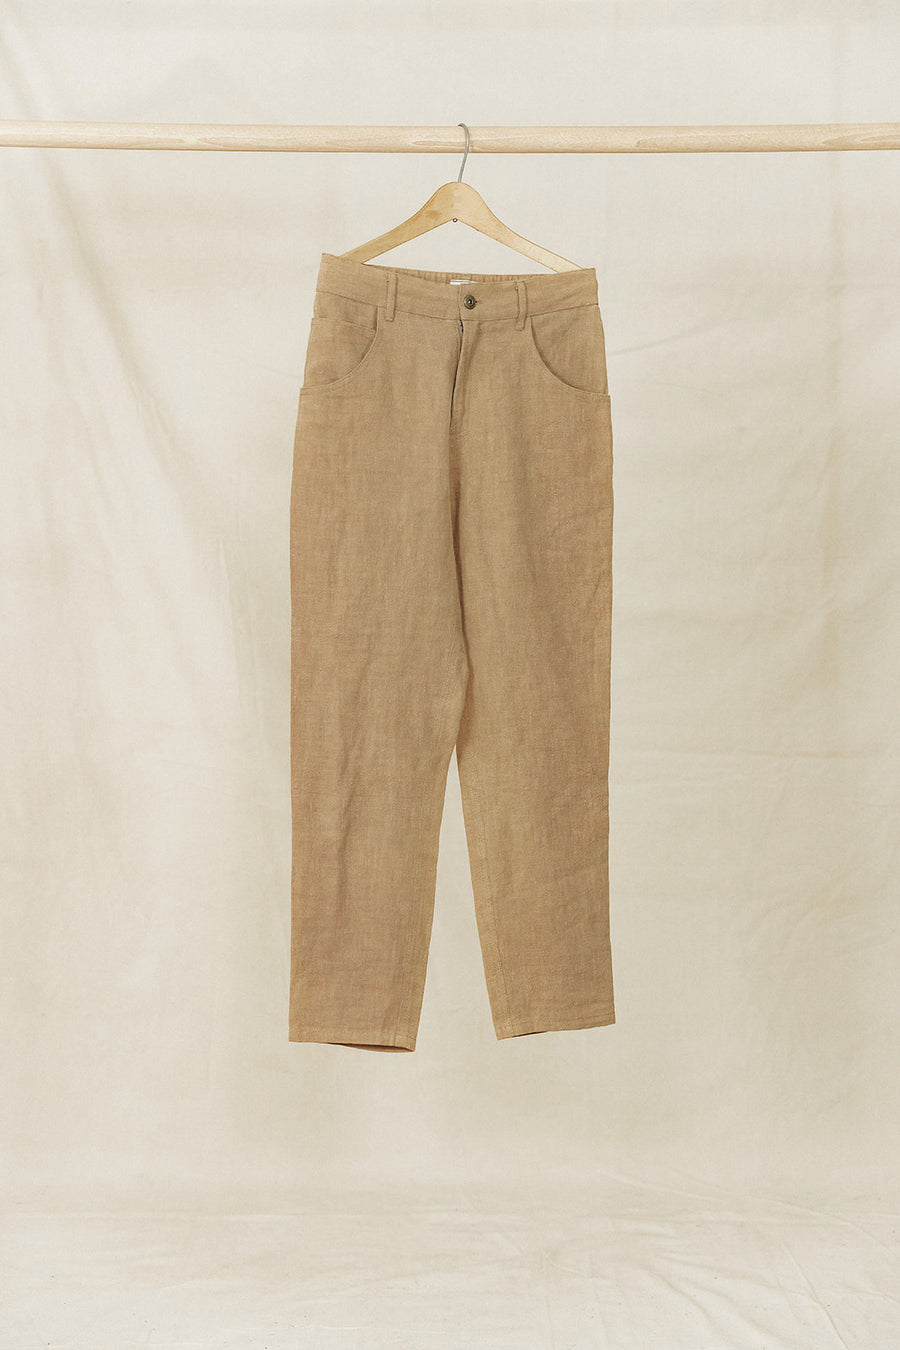 Miller - Unisex Textured Linen Pants - Light Brown